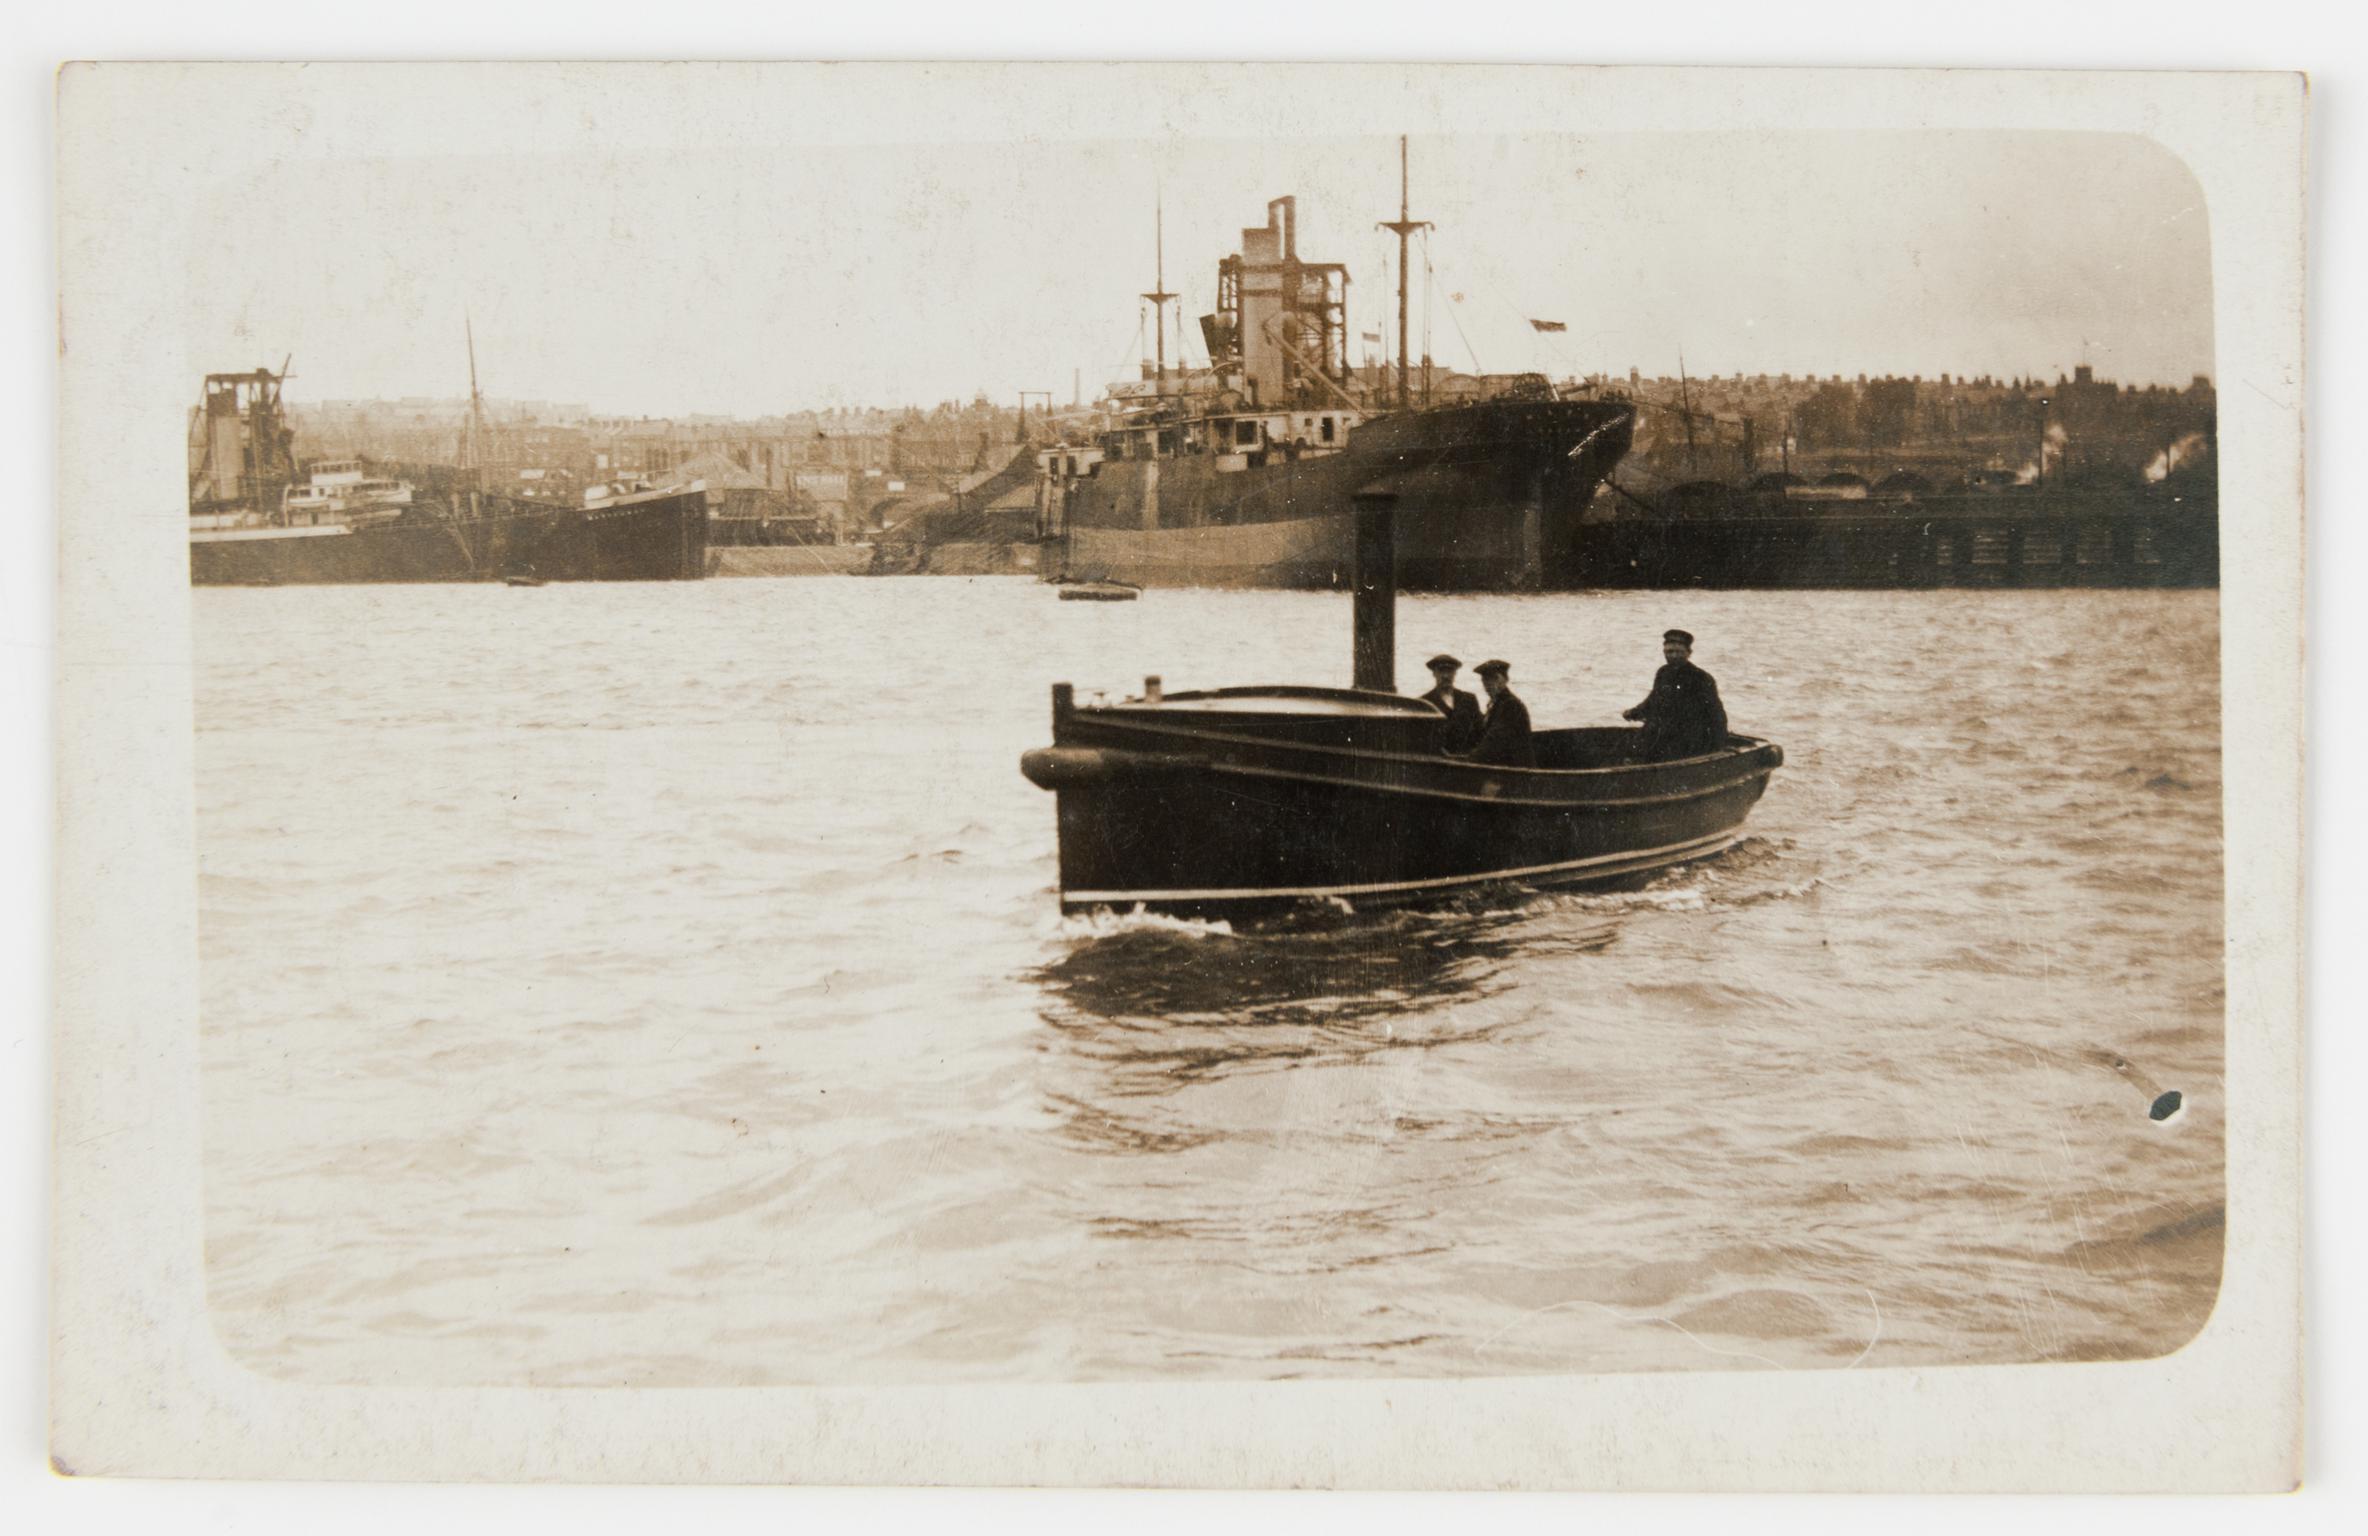 Barry No.1 Dock, photograph